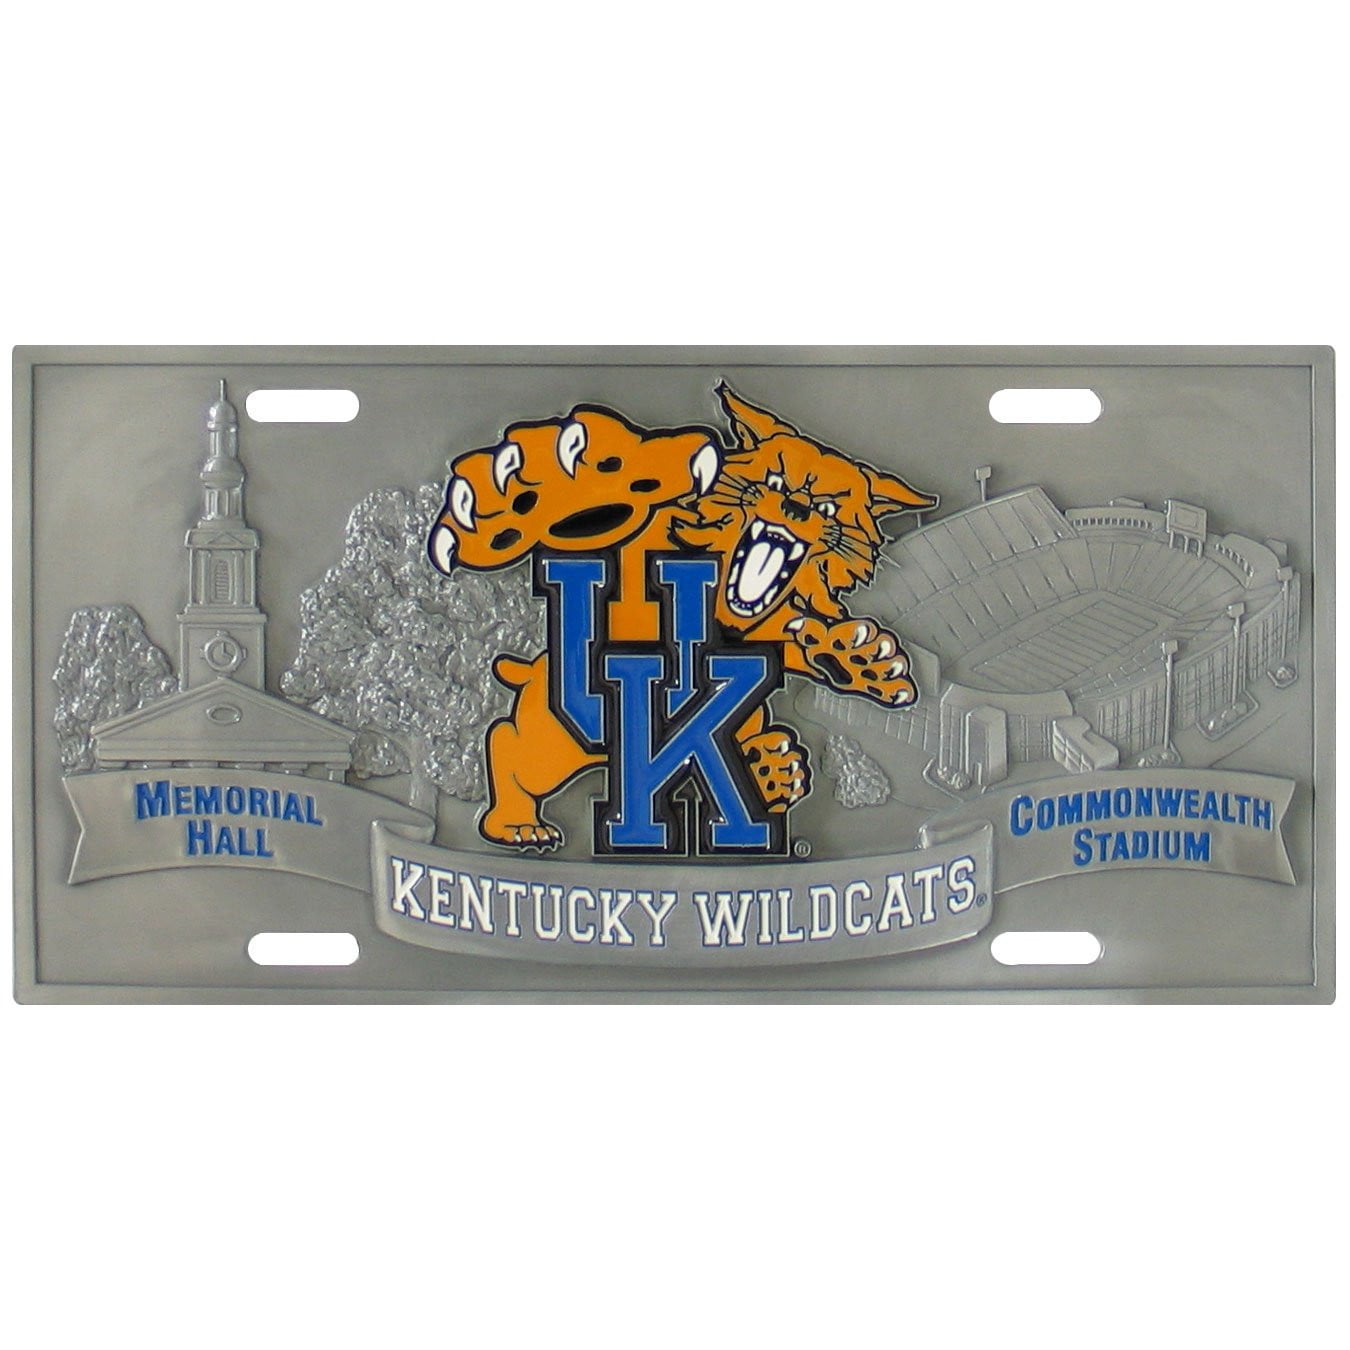 Kentucky Wildcats Collector's License Plate